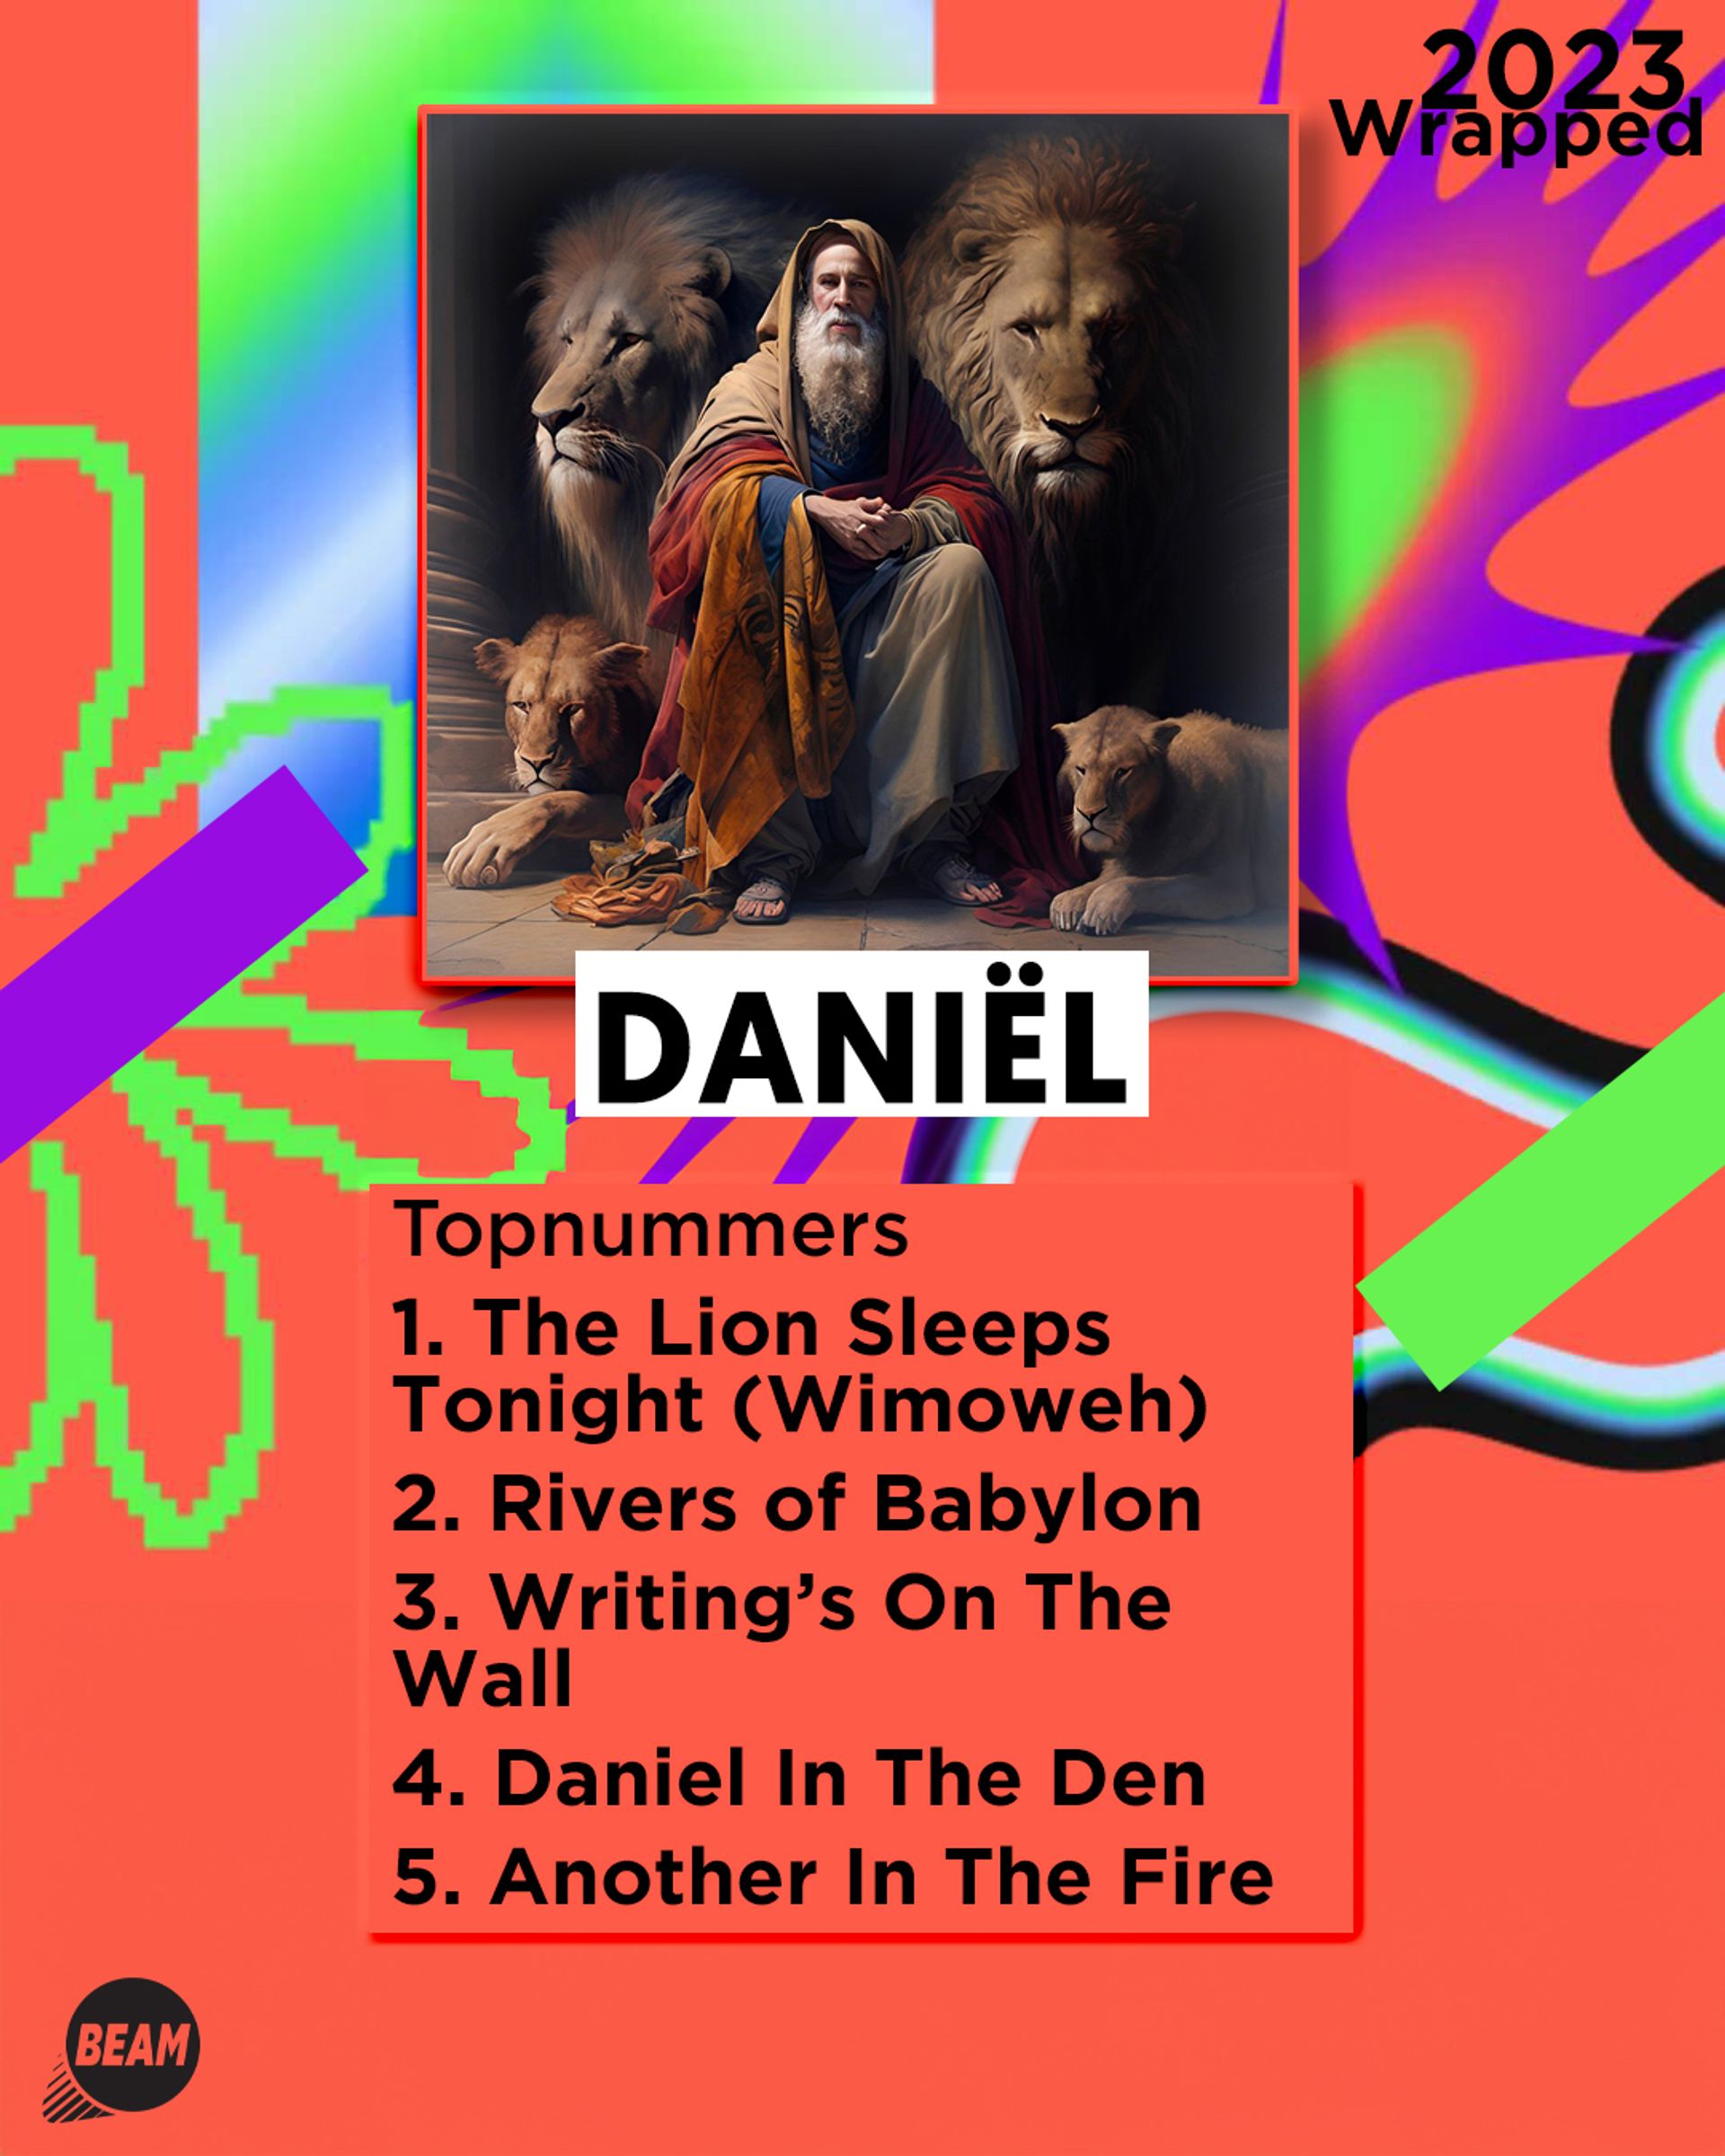 spotify wrapped DANIEL PL GR